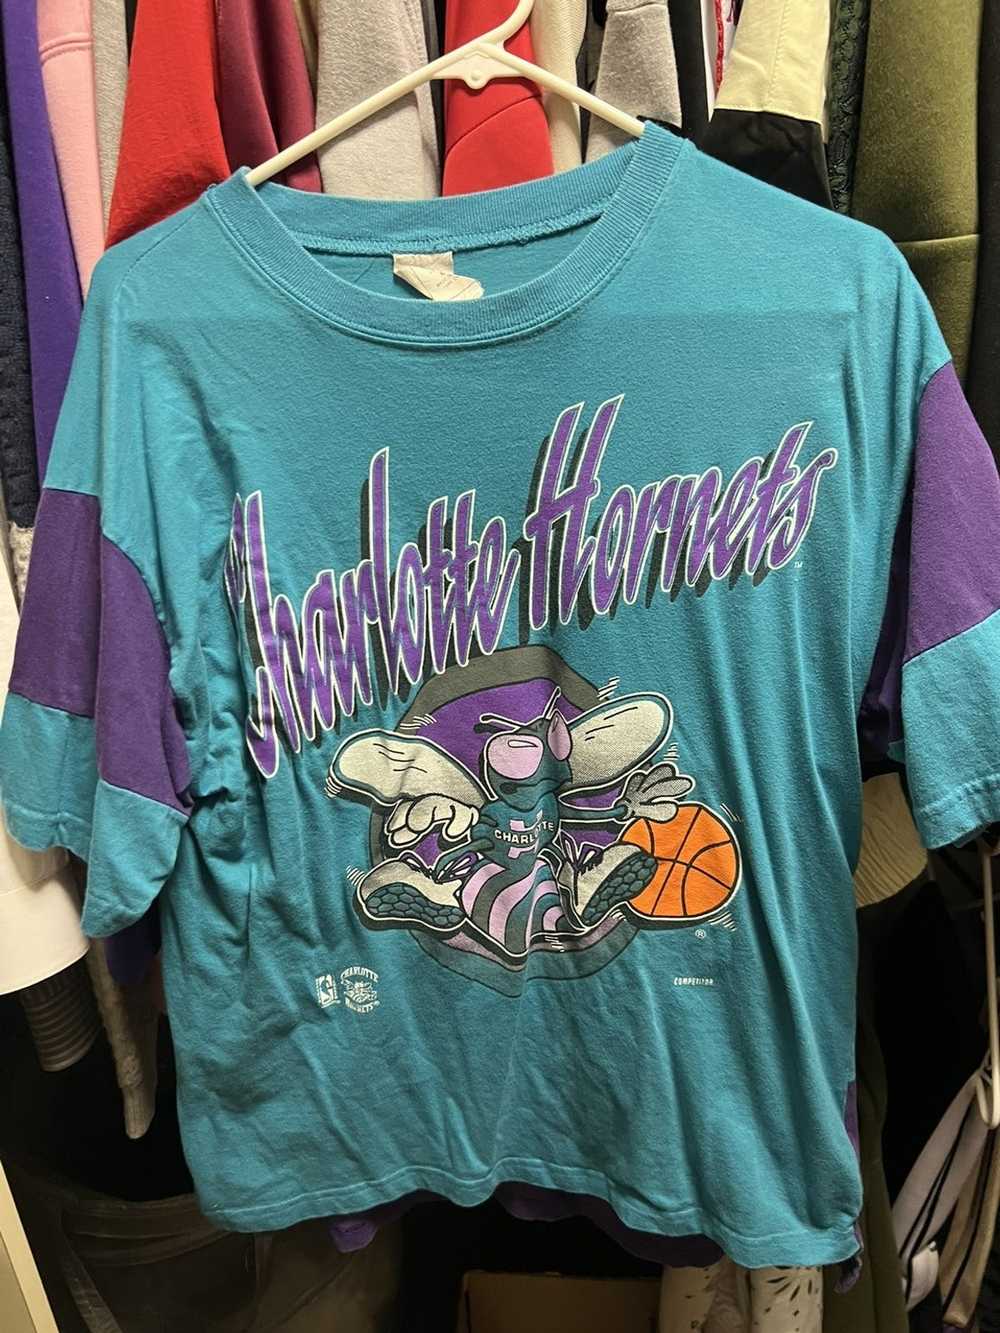 Vintage Charlotte Hornets Salem Sportswear All Over Print Shirt NBA